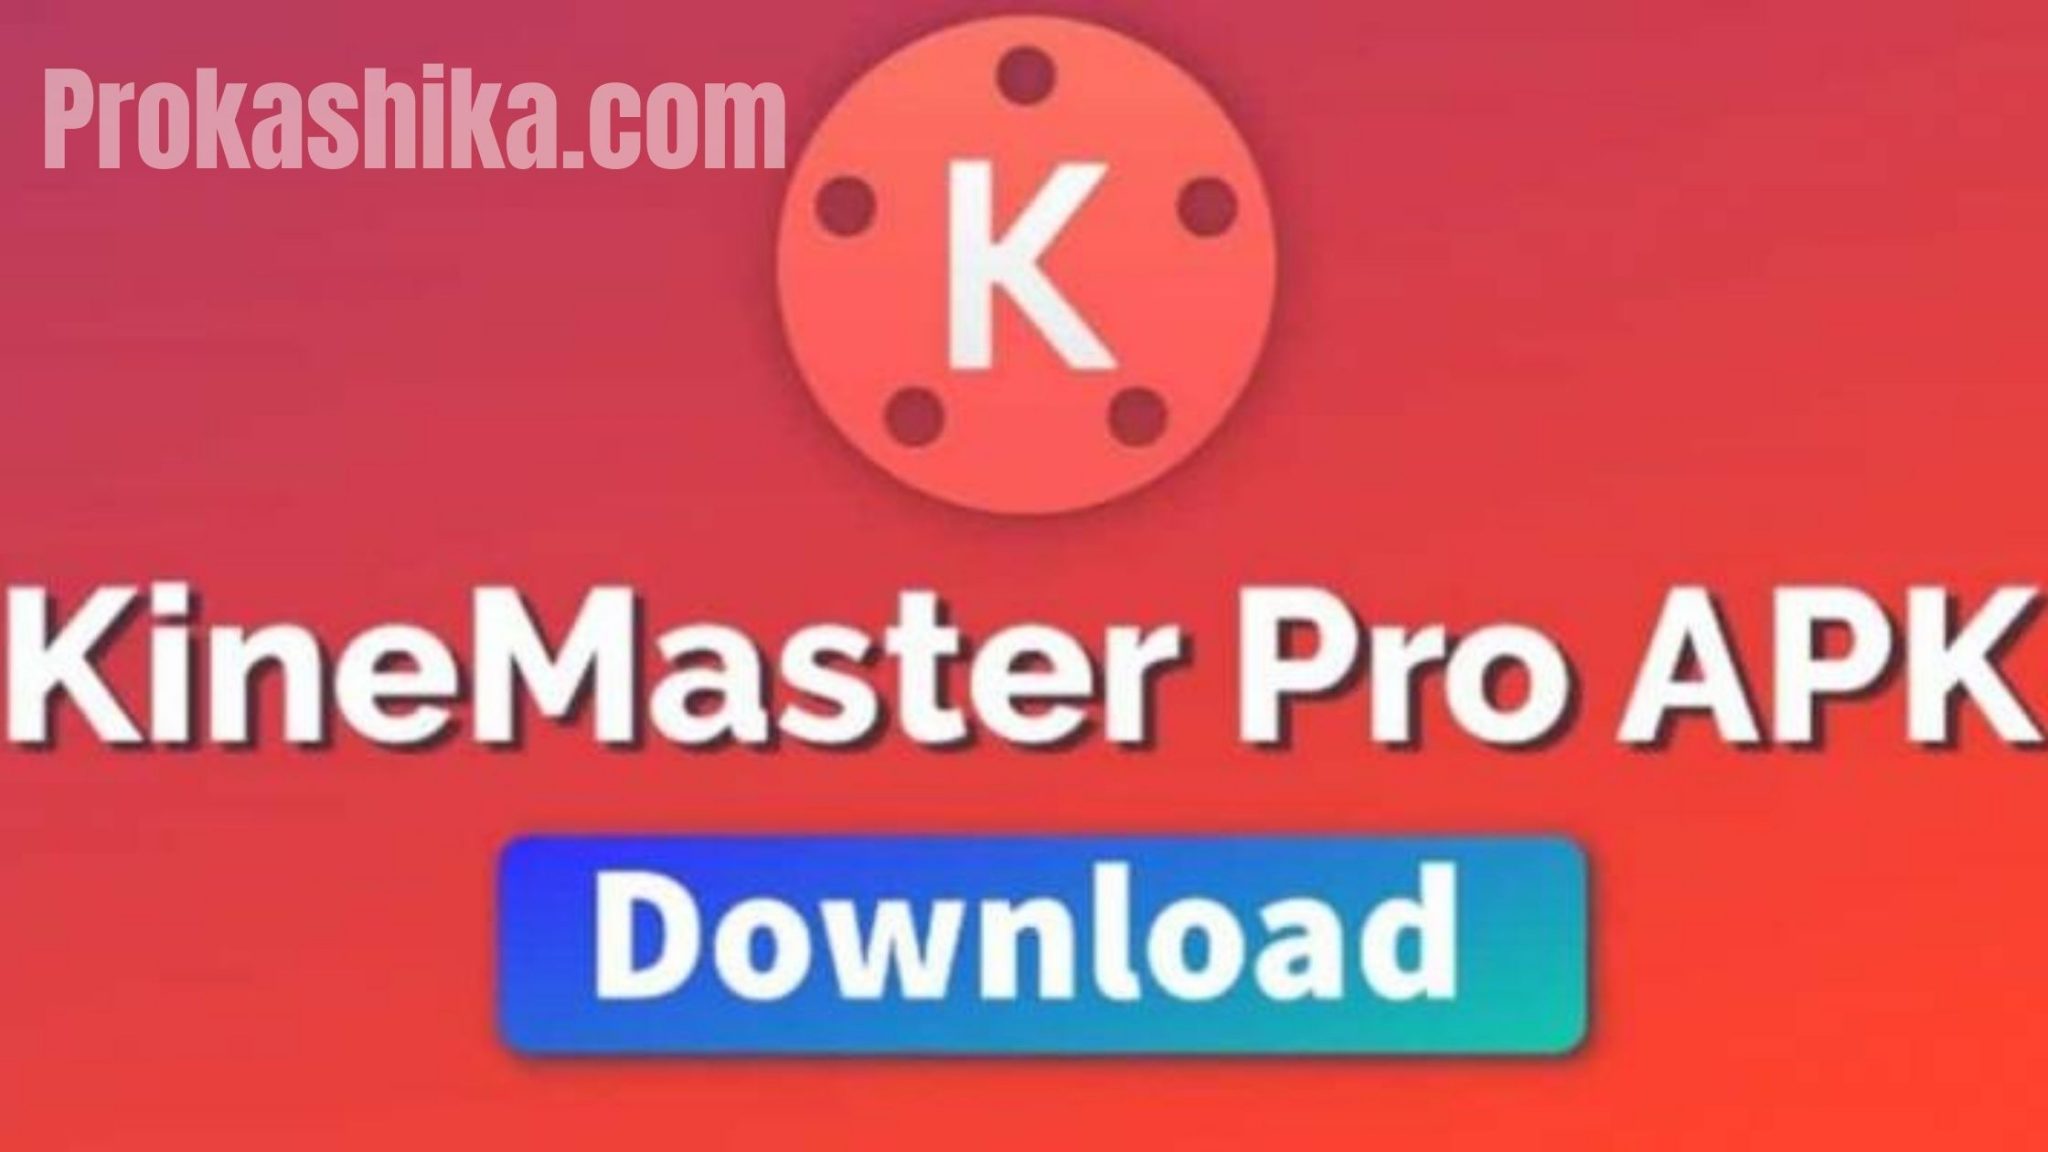 kinemaster pro apk download with chroma key